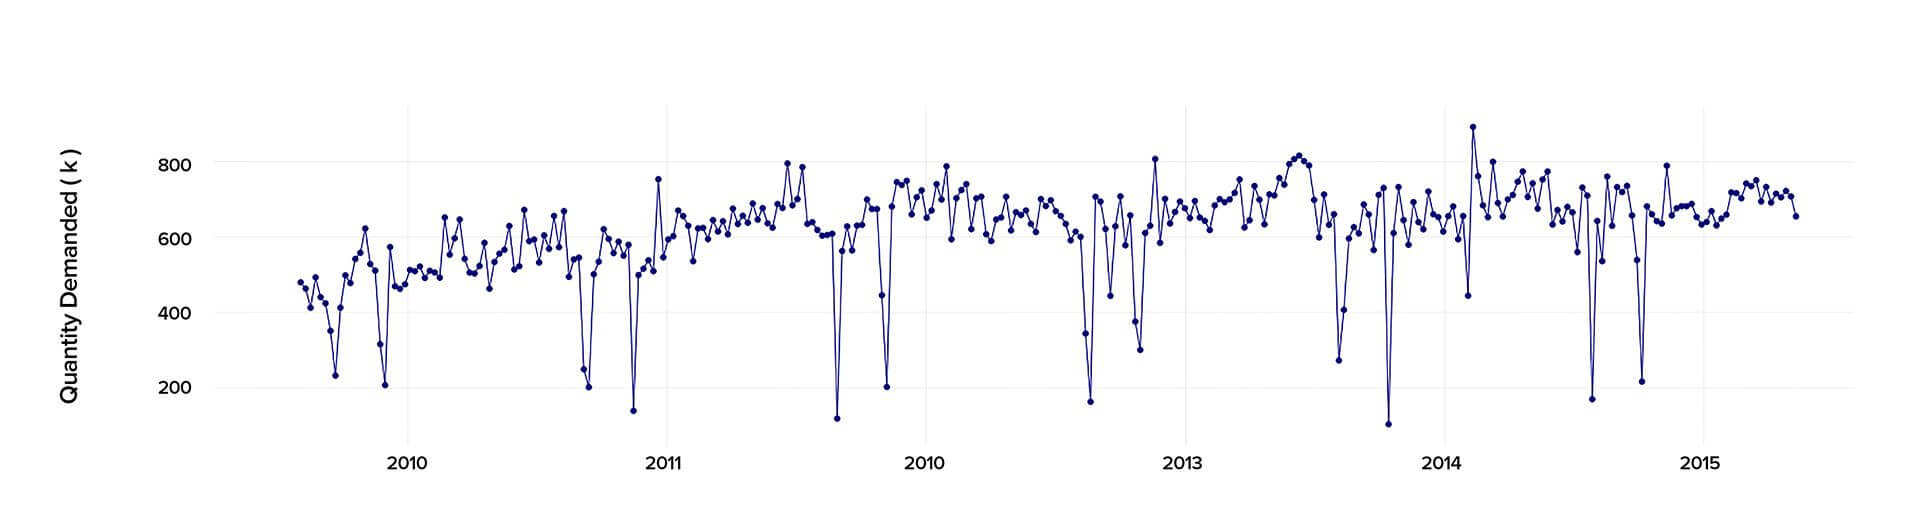 The demand data over 2010-2015 timeframe